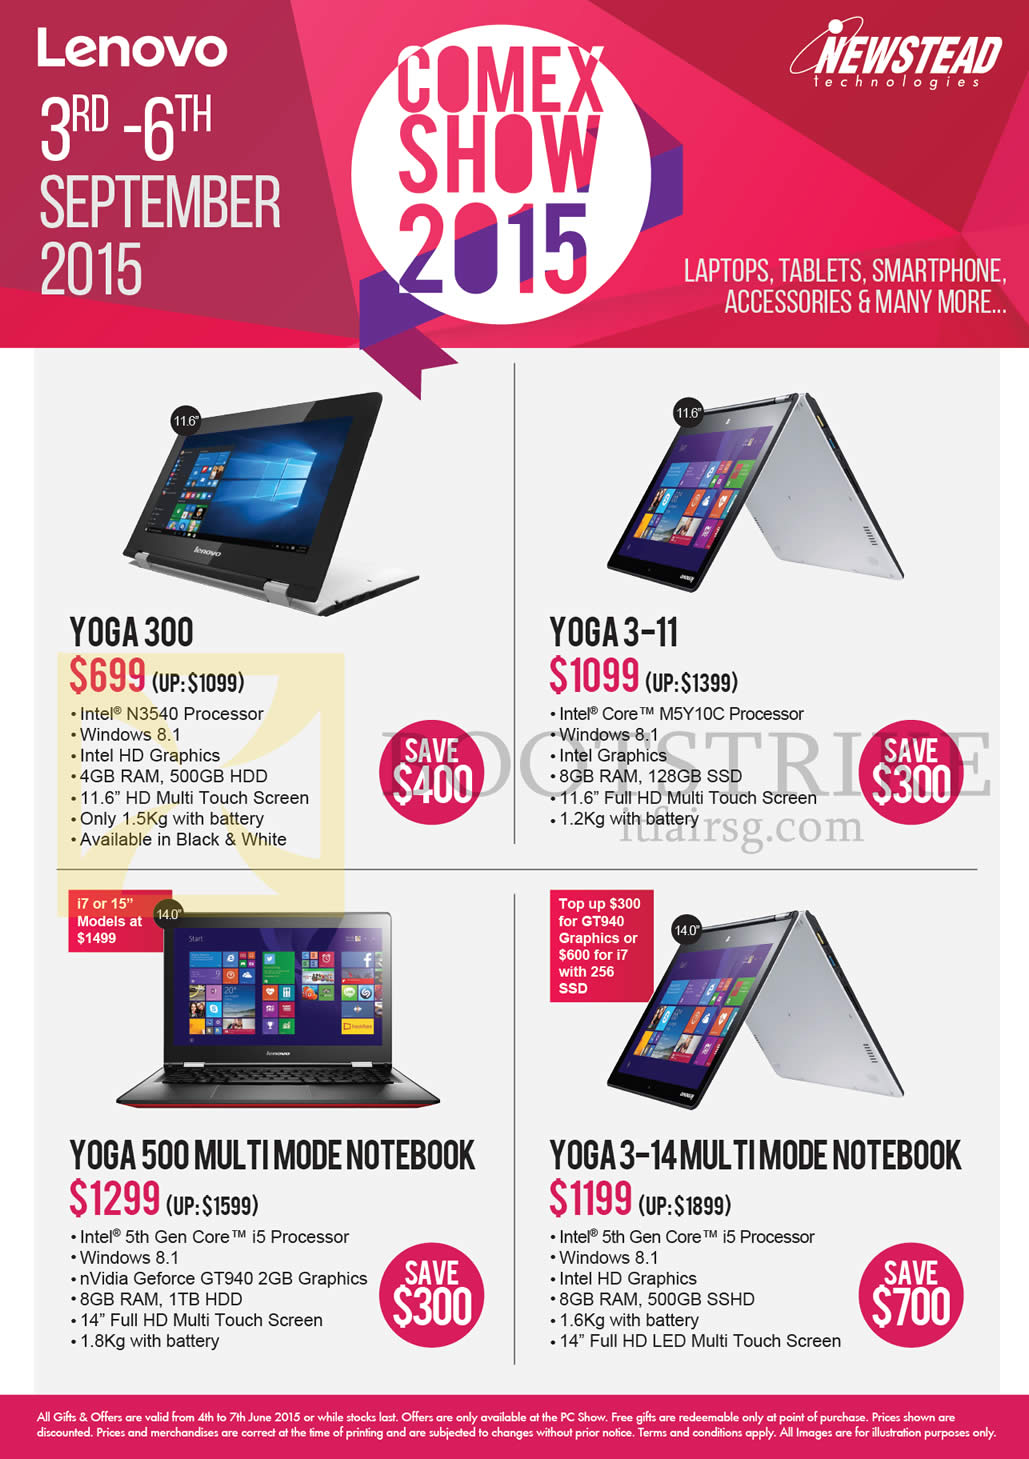 COMEX 2015 price list image brochure of Lenovo Newstead Notebooks Yoga 300, 3-11, 500, 3-14